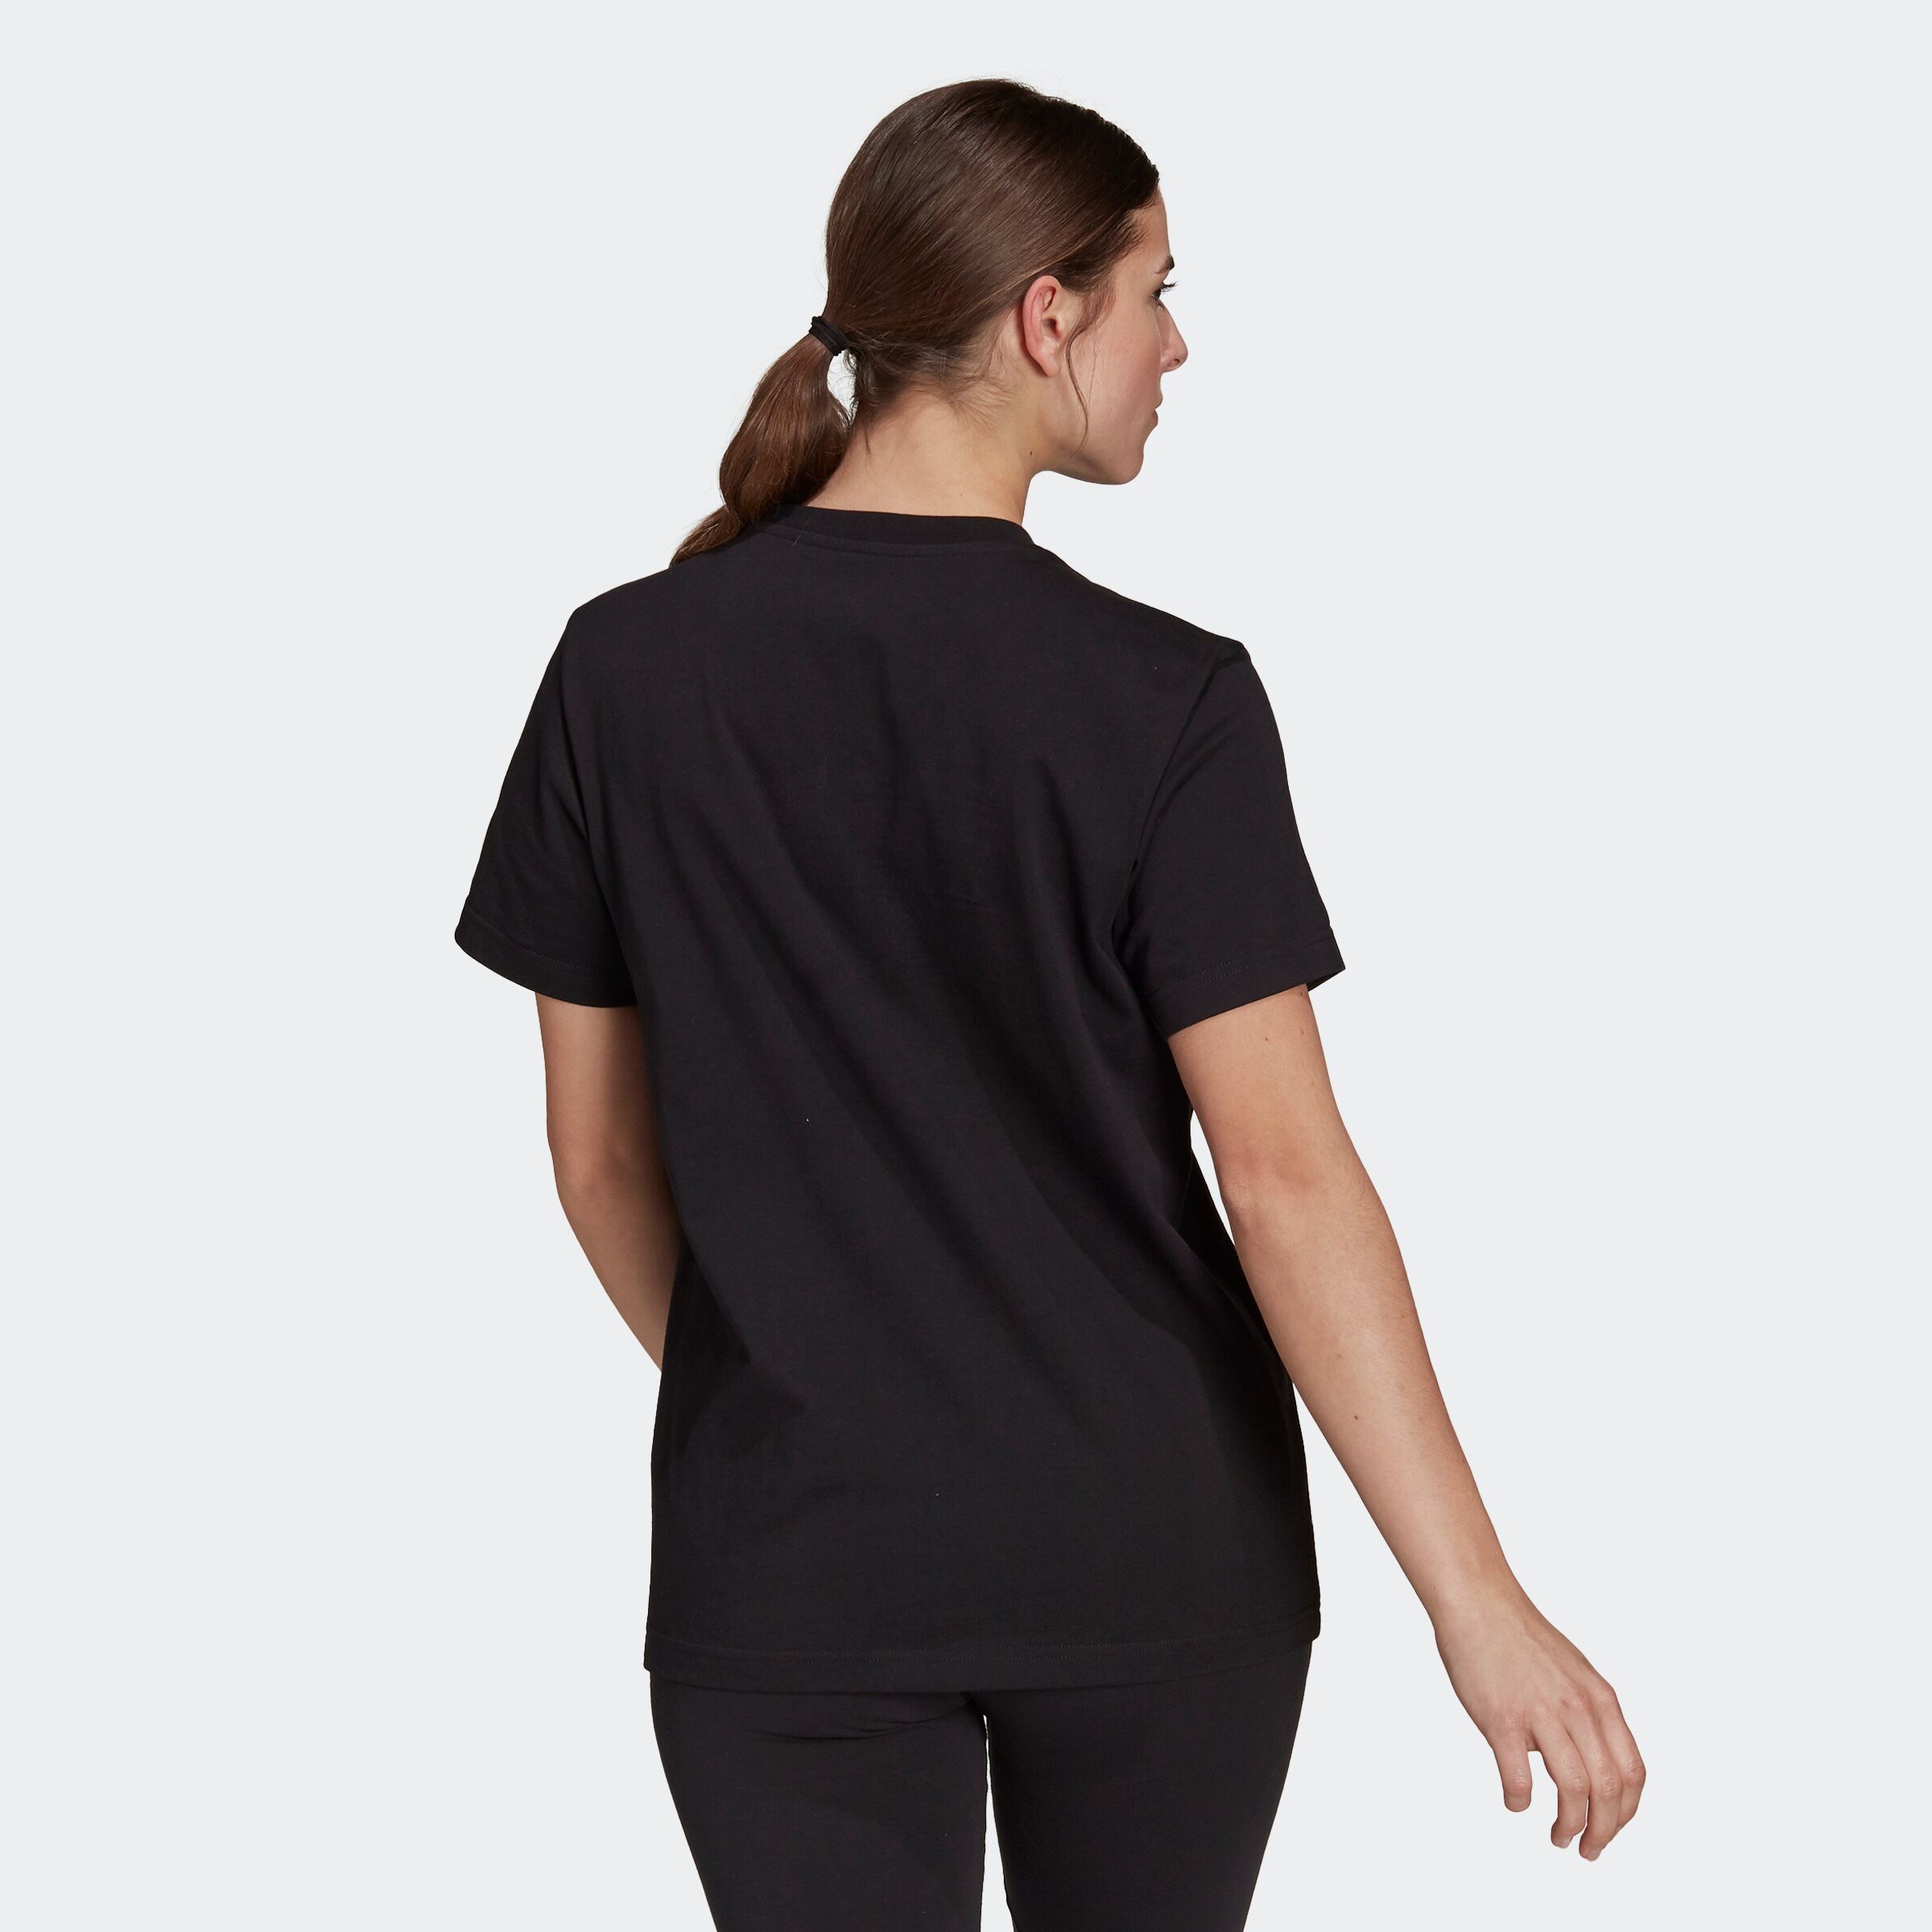 Adidas Performance T-Shirt »MARIMEKKO GRAPHIC 3 GRAPHICS LOOSE WOMENS« schwarz  L (42/44) M (38/40) S (34/36) XL (46/48) XS (30/32) XXL (50/52)